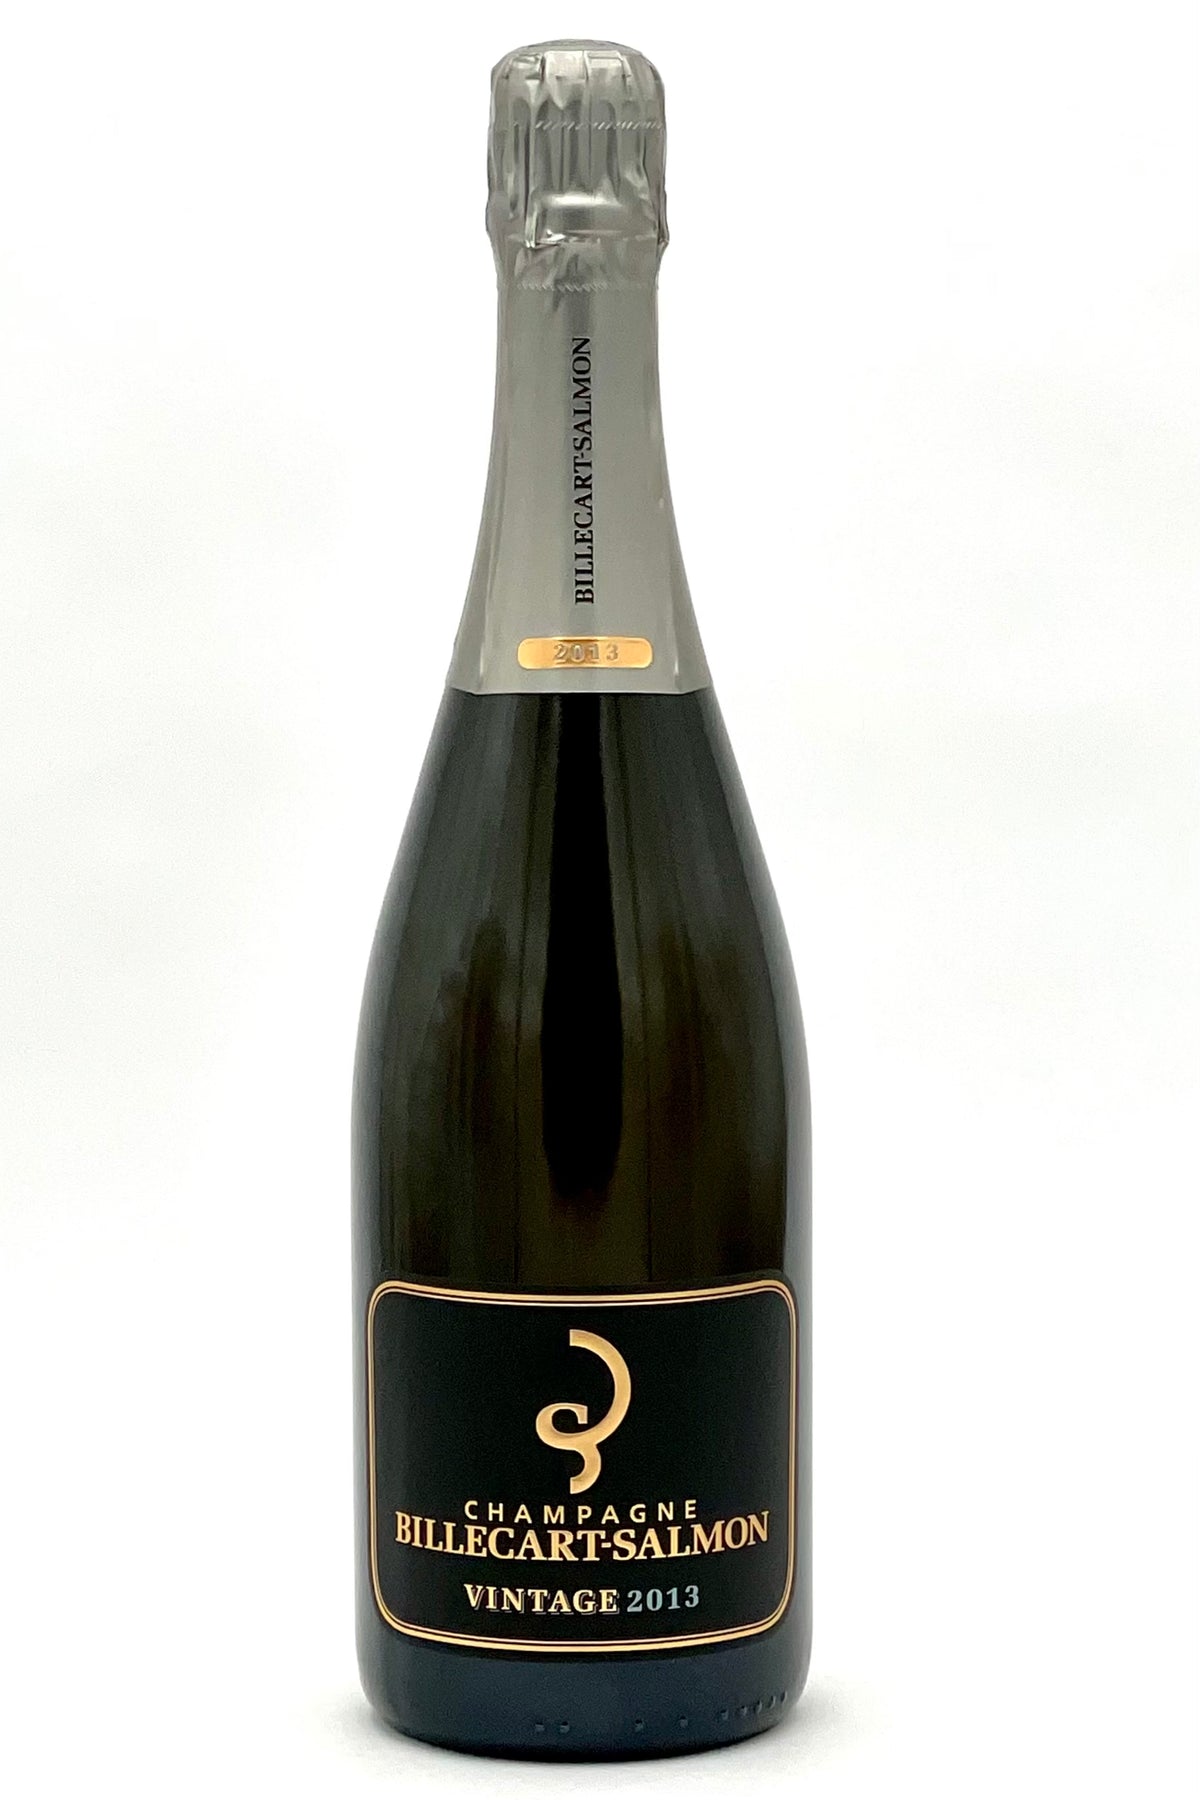 Billecart-Salmon Extra Brut 2013 Vintage Champagne